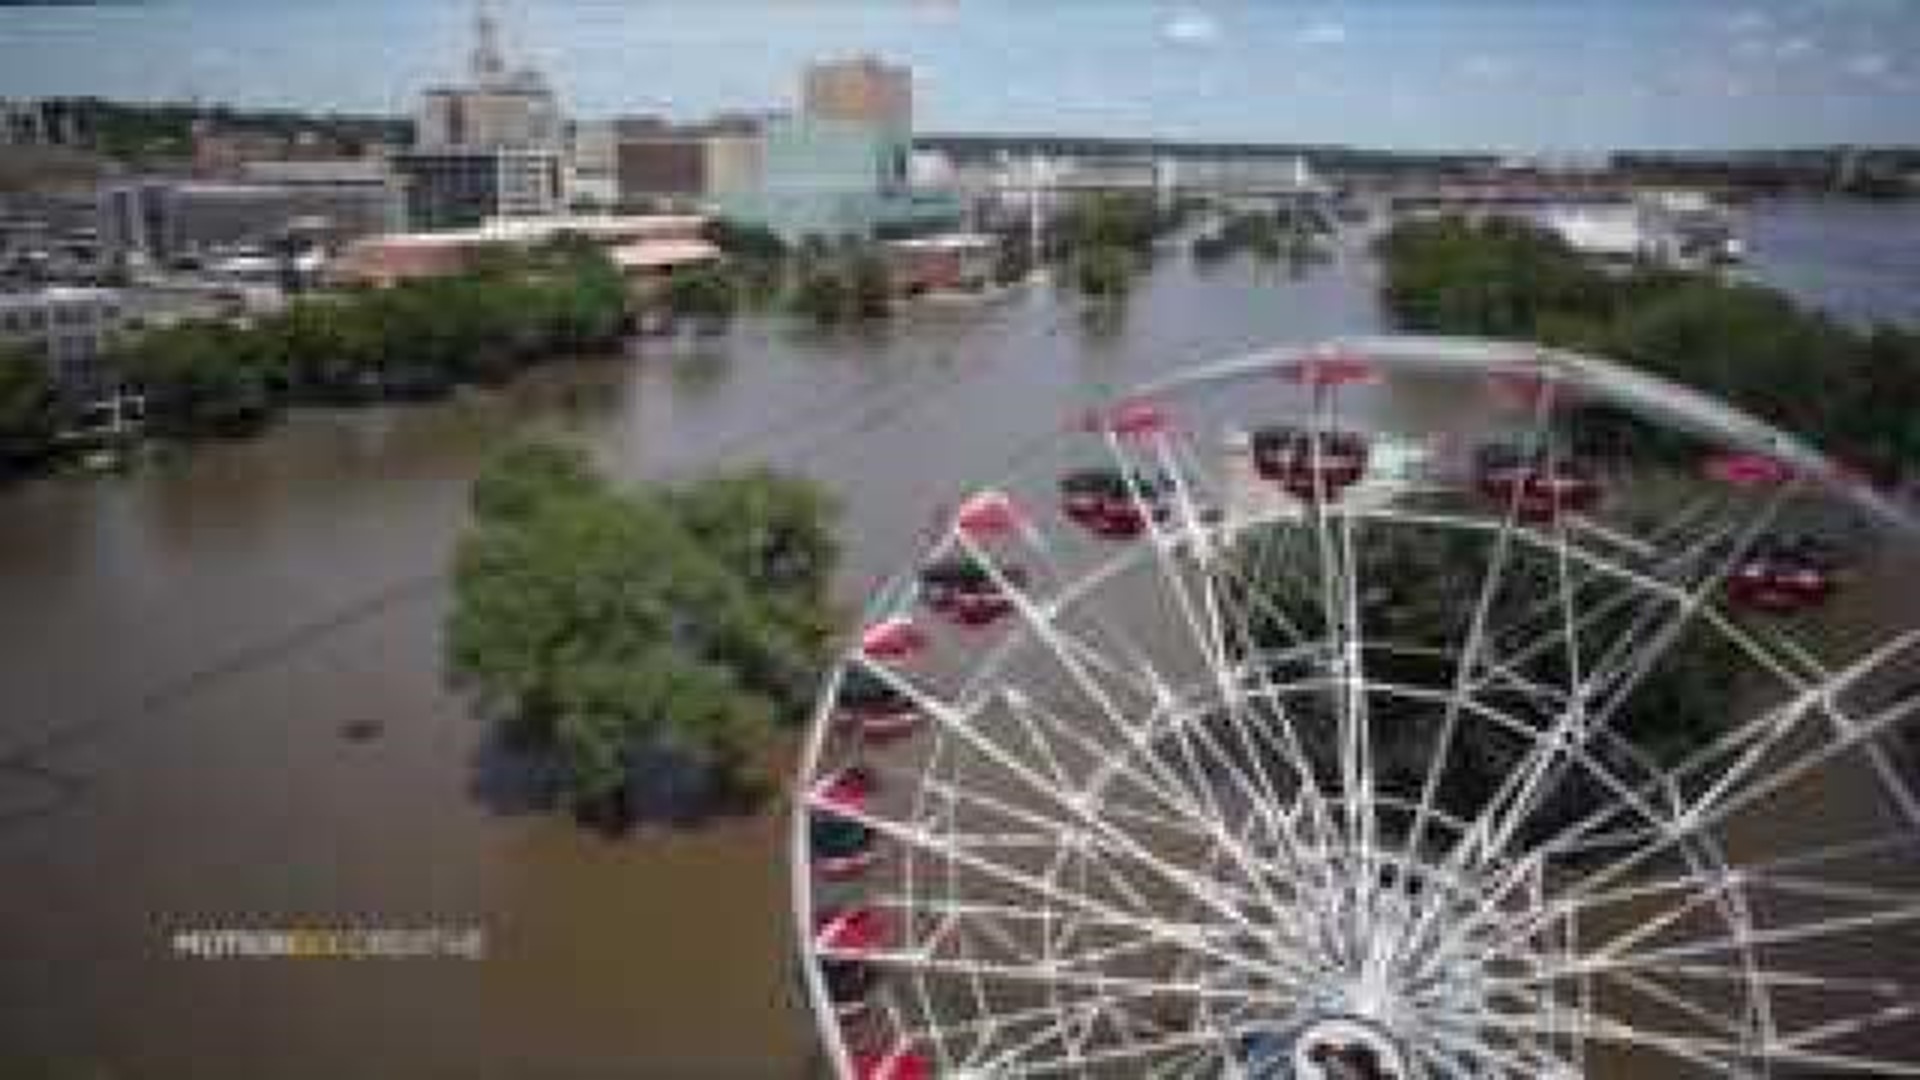 Filmmaker gives aerial view of Davenport flooding